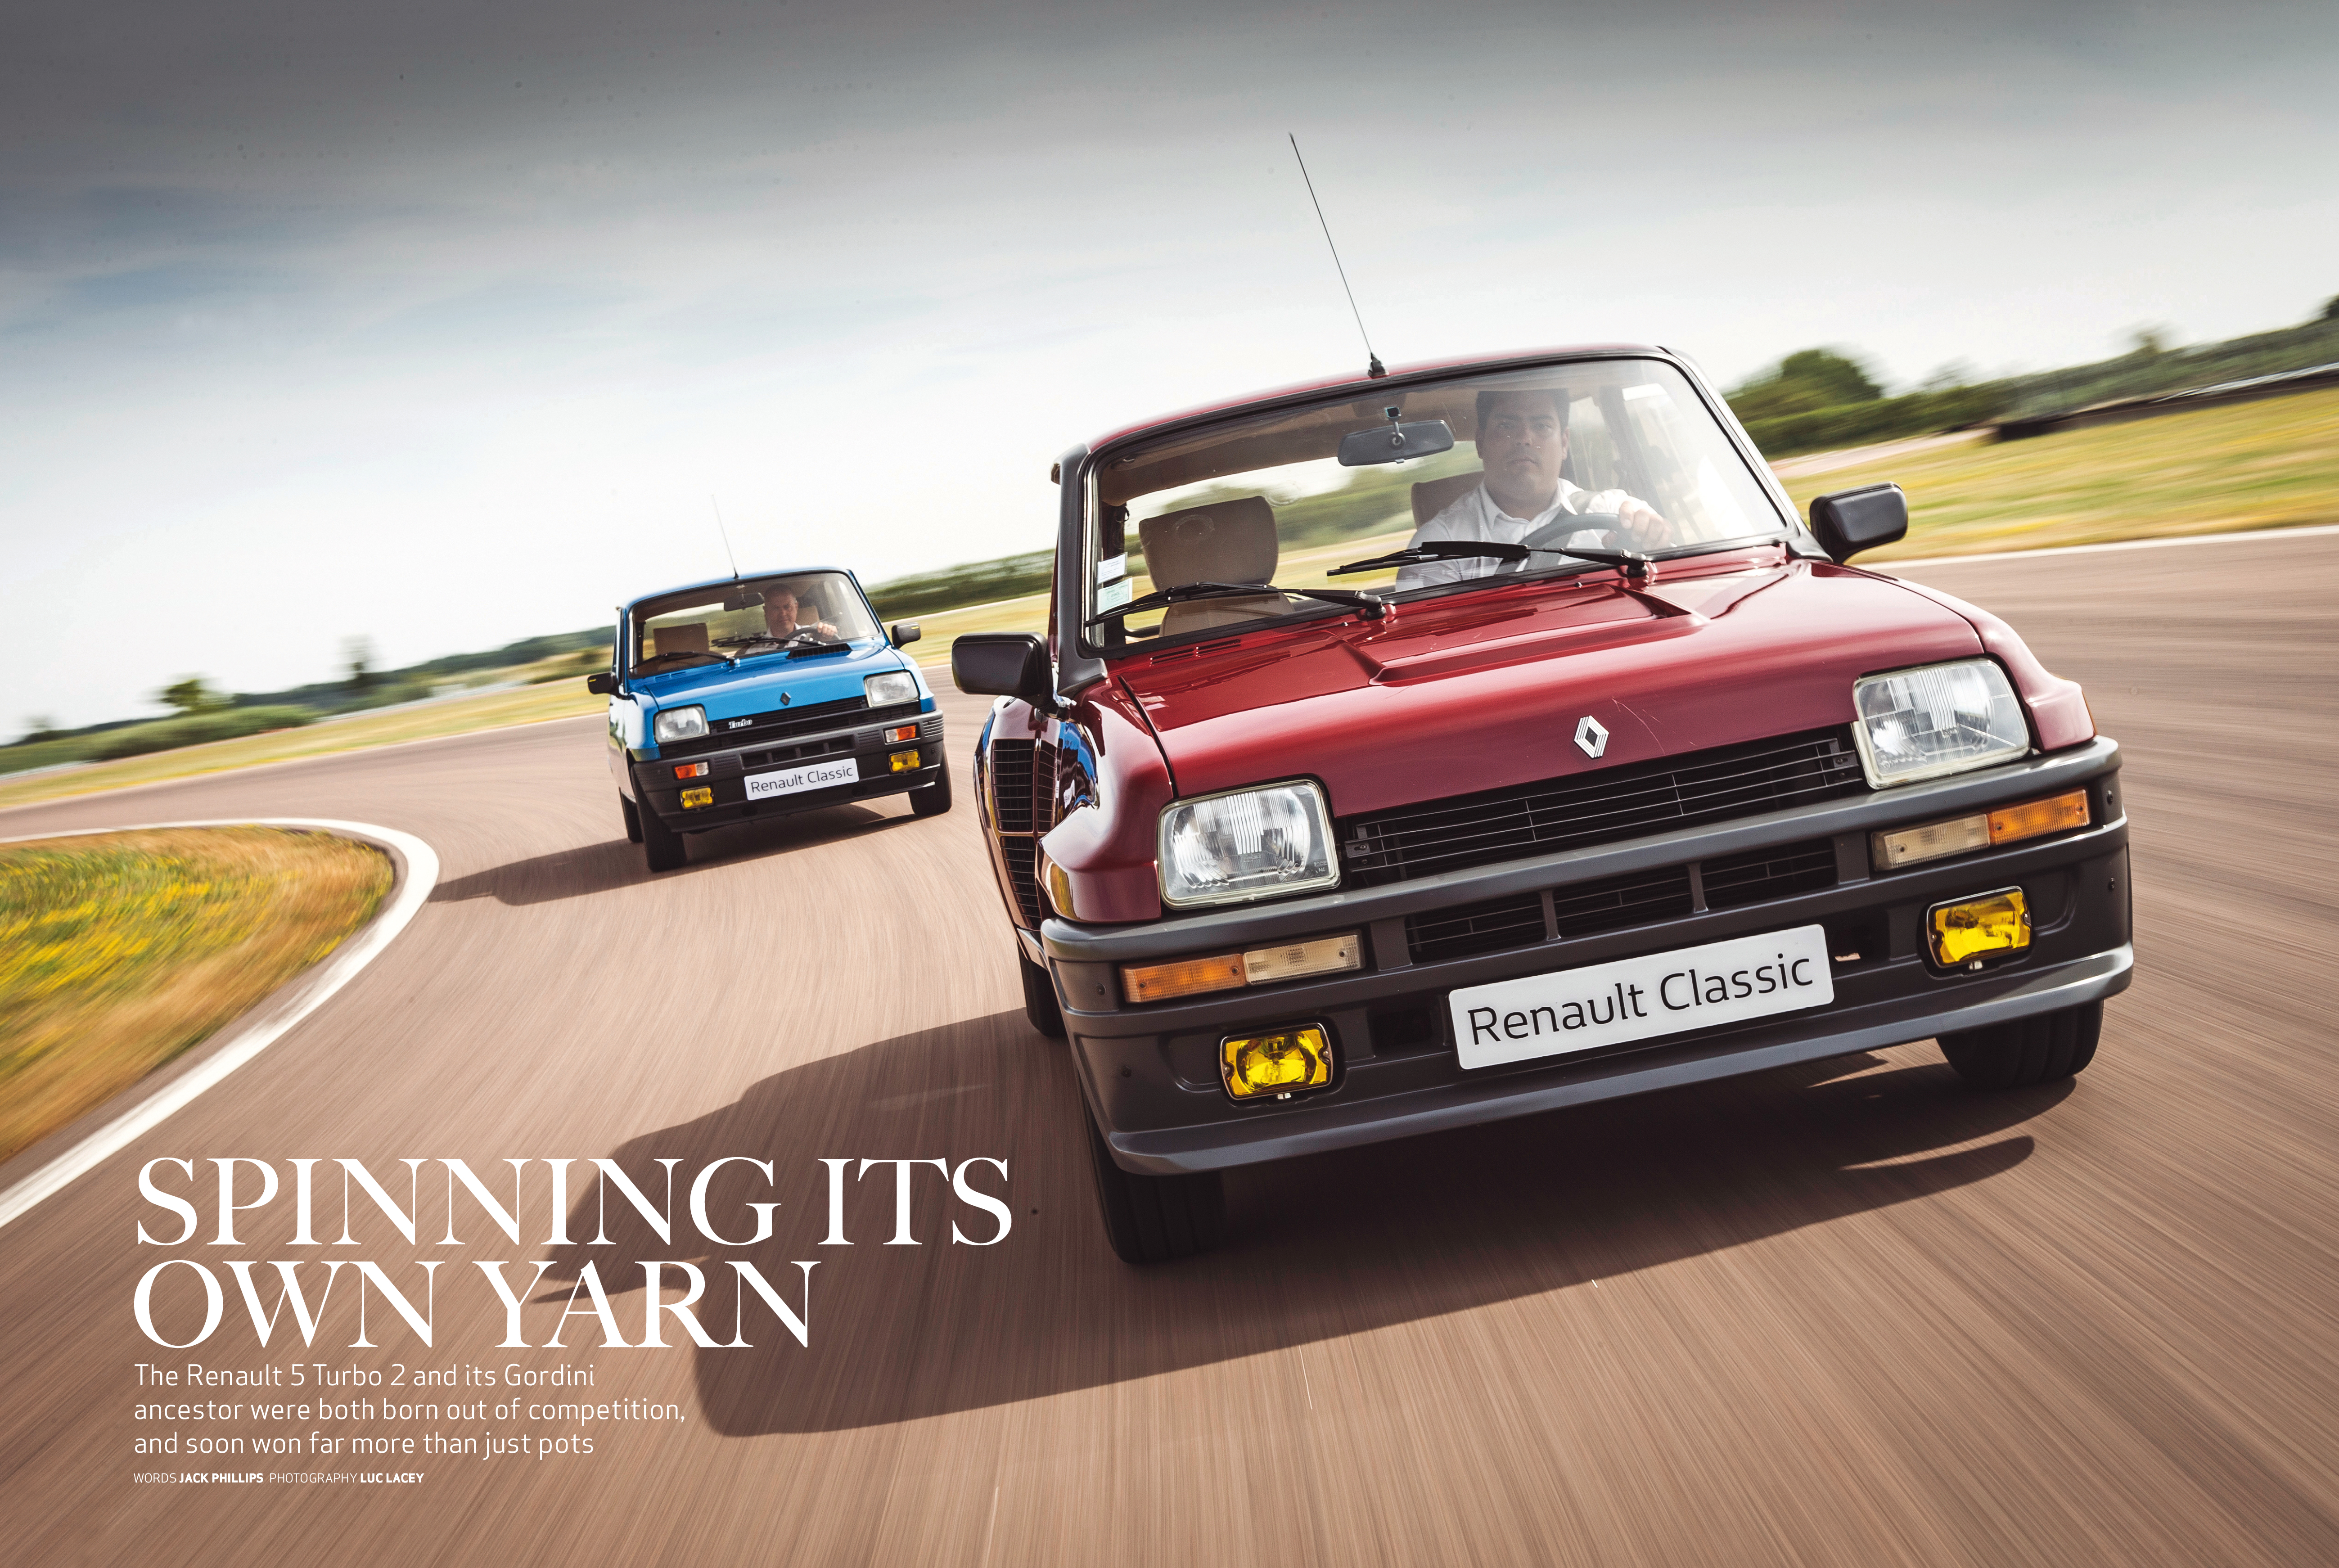 Classic & Sports Car – Bond’s Aston Martins: Inside the November 2019 issue of C&SC